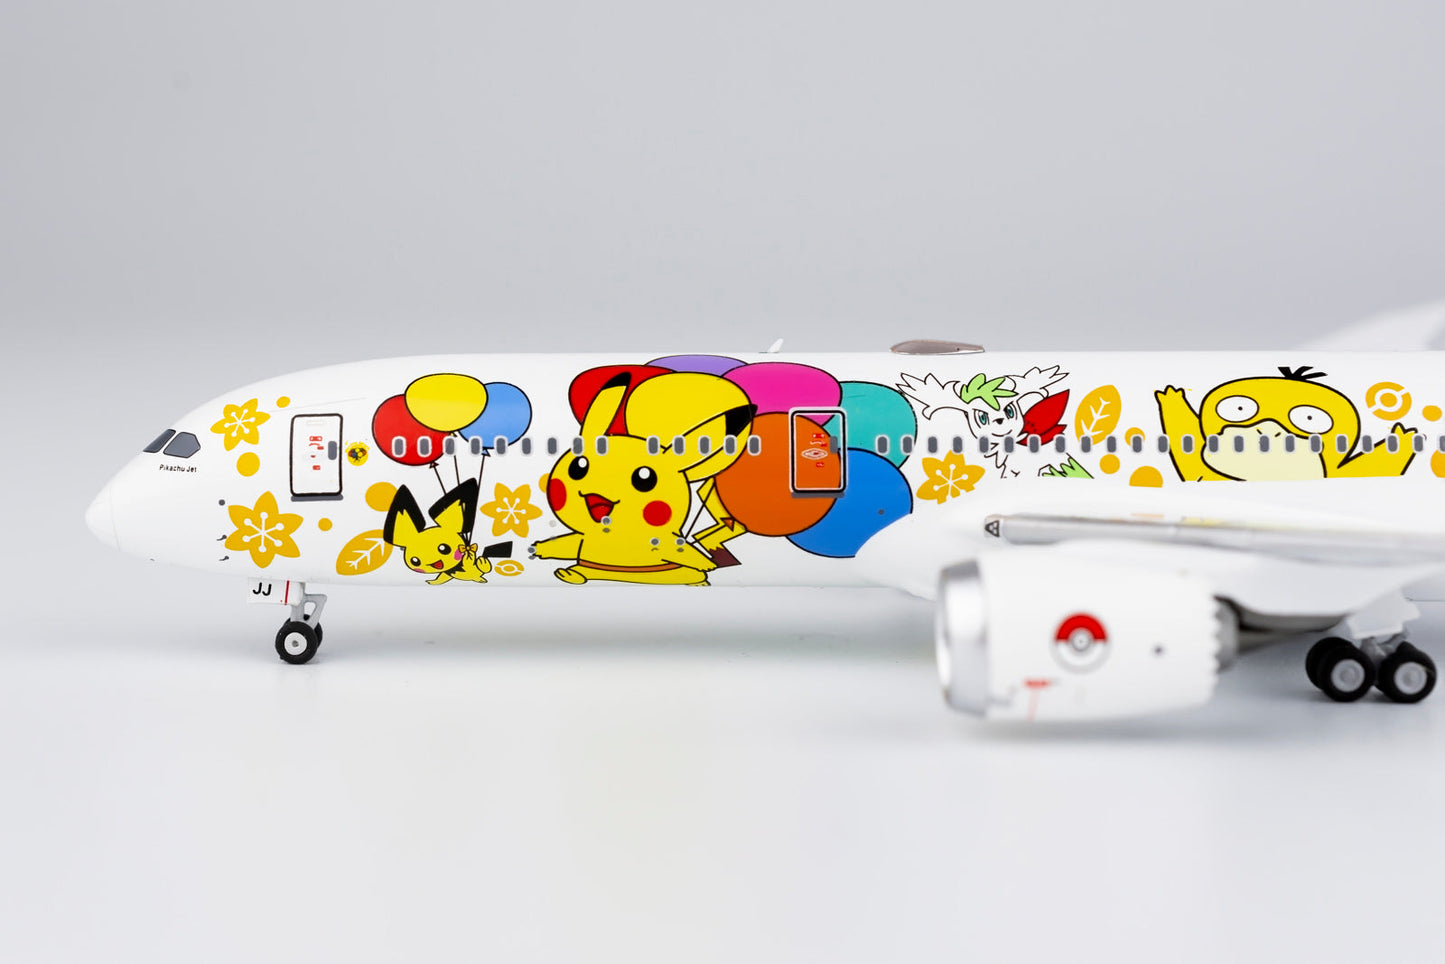 1/400 Scoot B 787-9 "Pikachu Jet TR" NG Models 55095